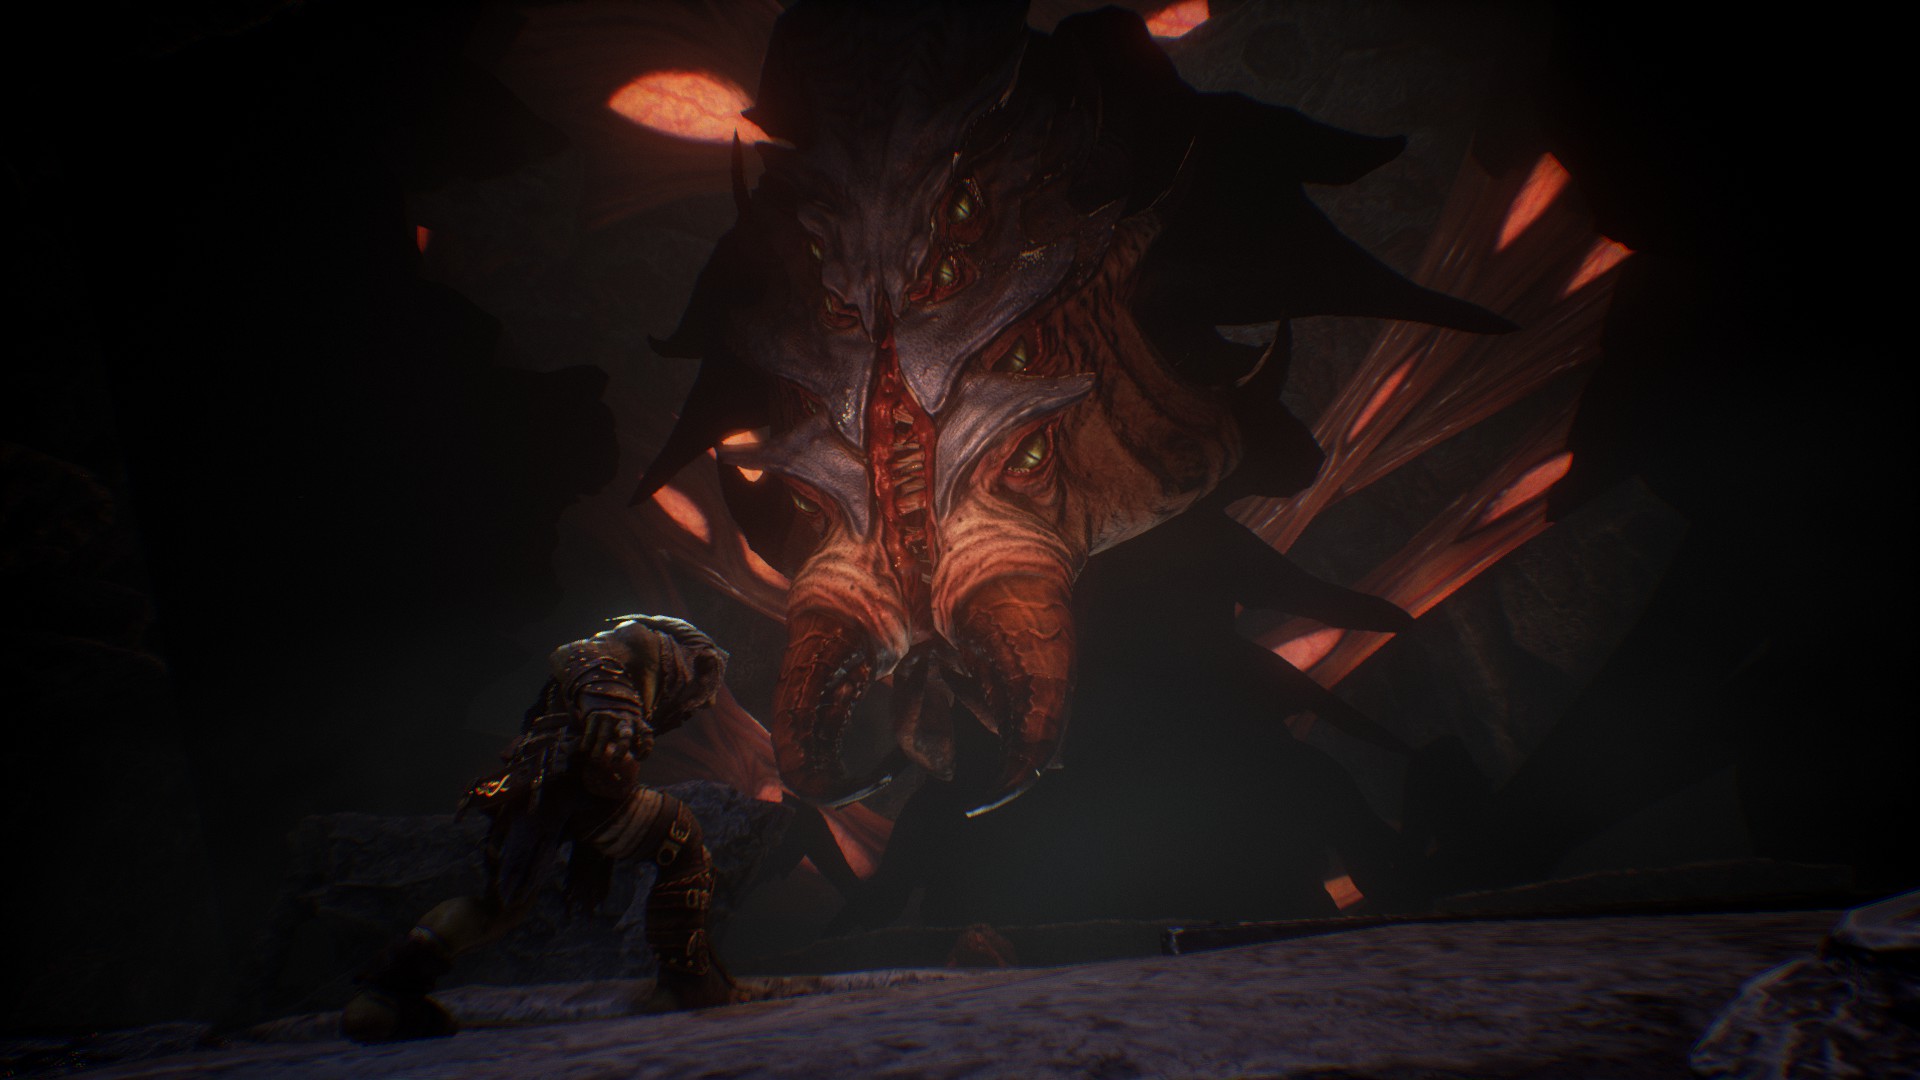 video game, styx: shards of darkness